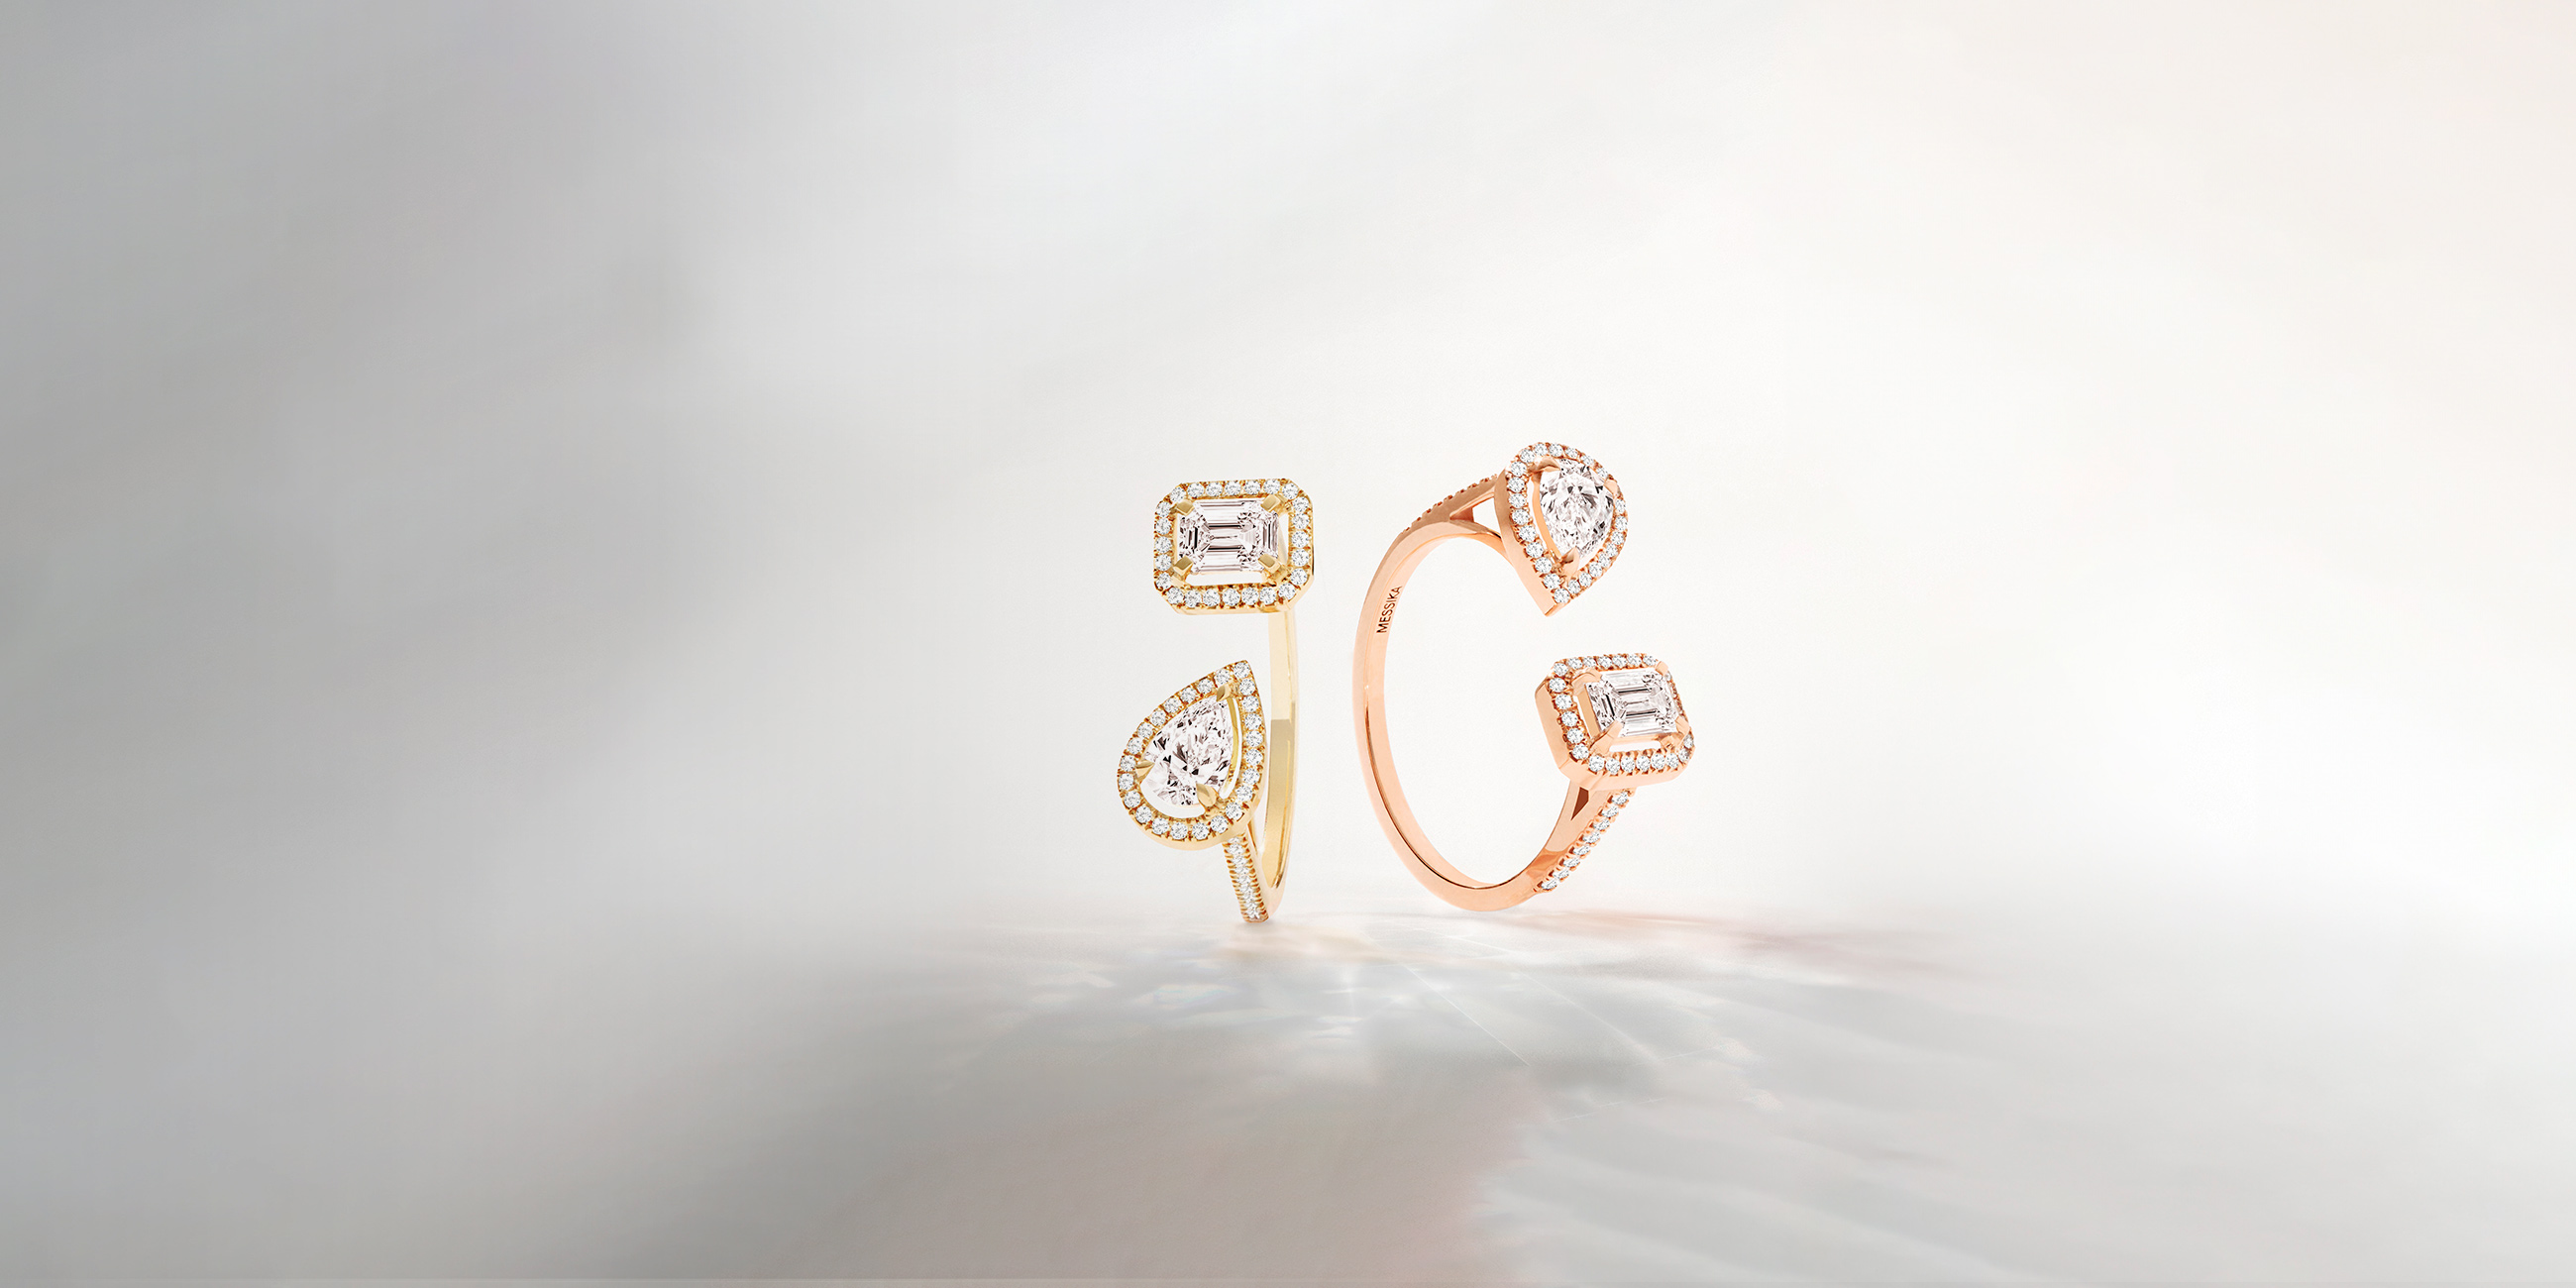 Luxury gold and diamond jewelry